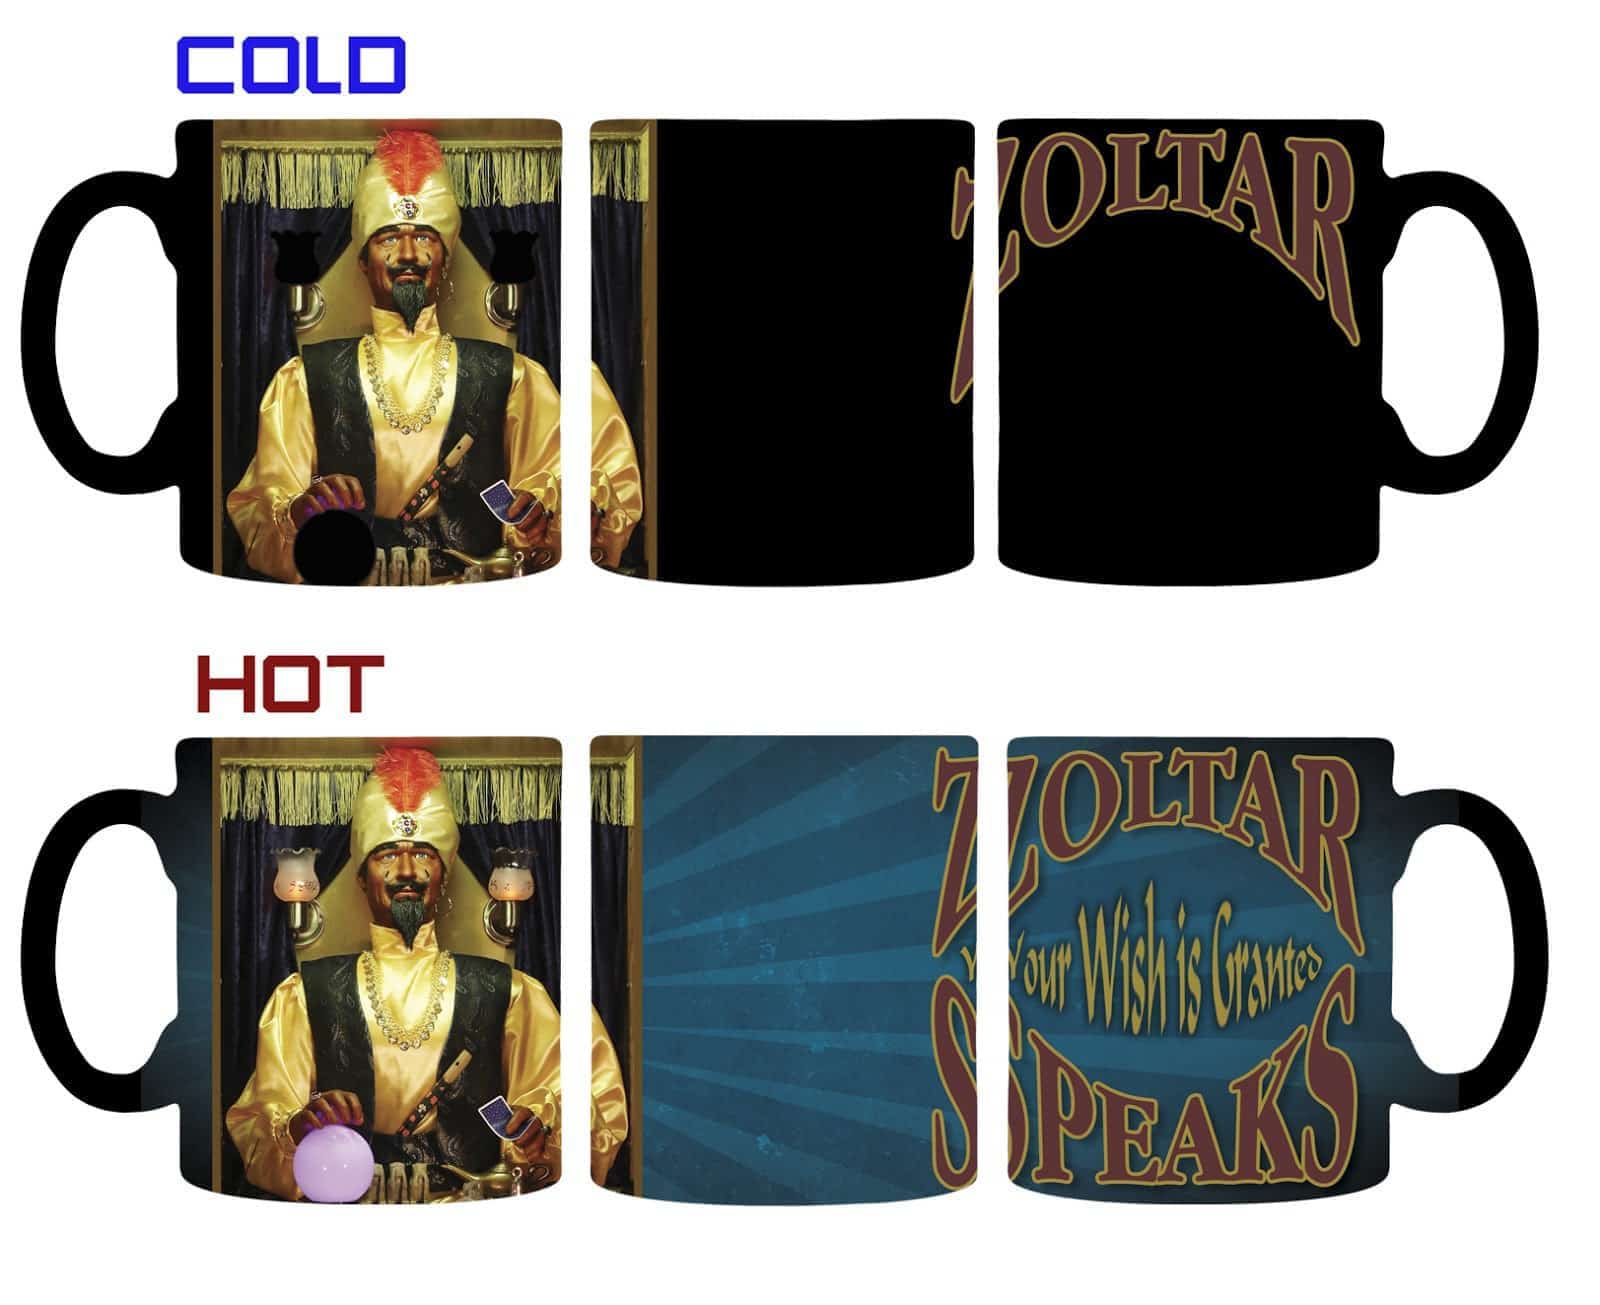 Surreal Entertainment Creates Good Fortune With Zoltar® Heat Change Coffee Mug